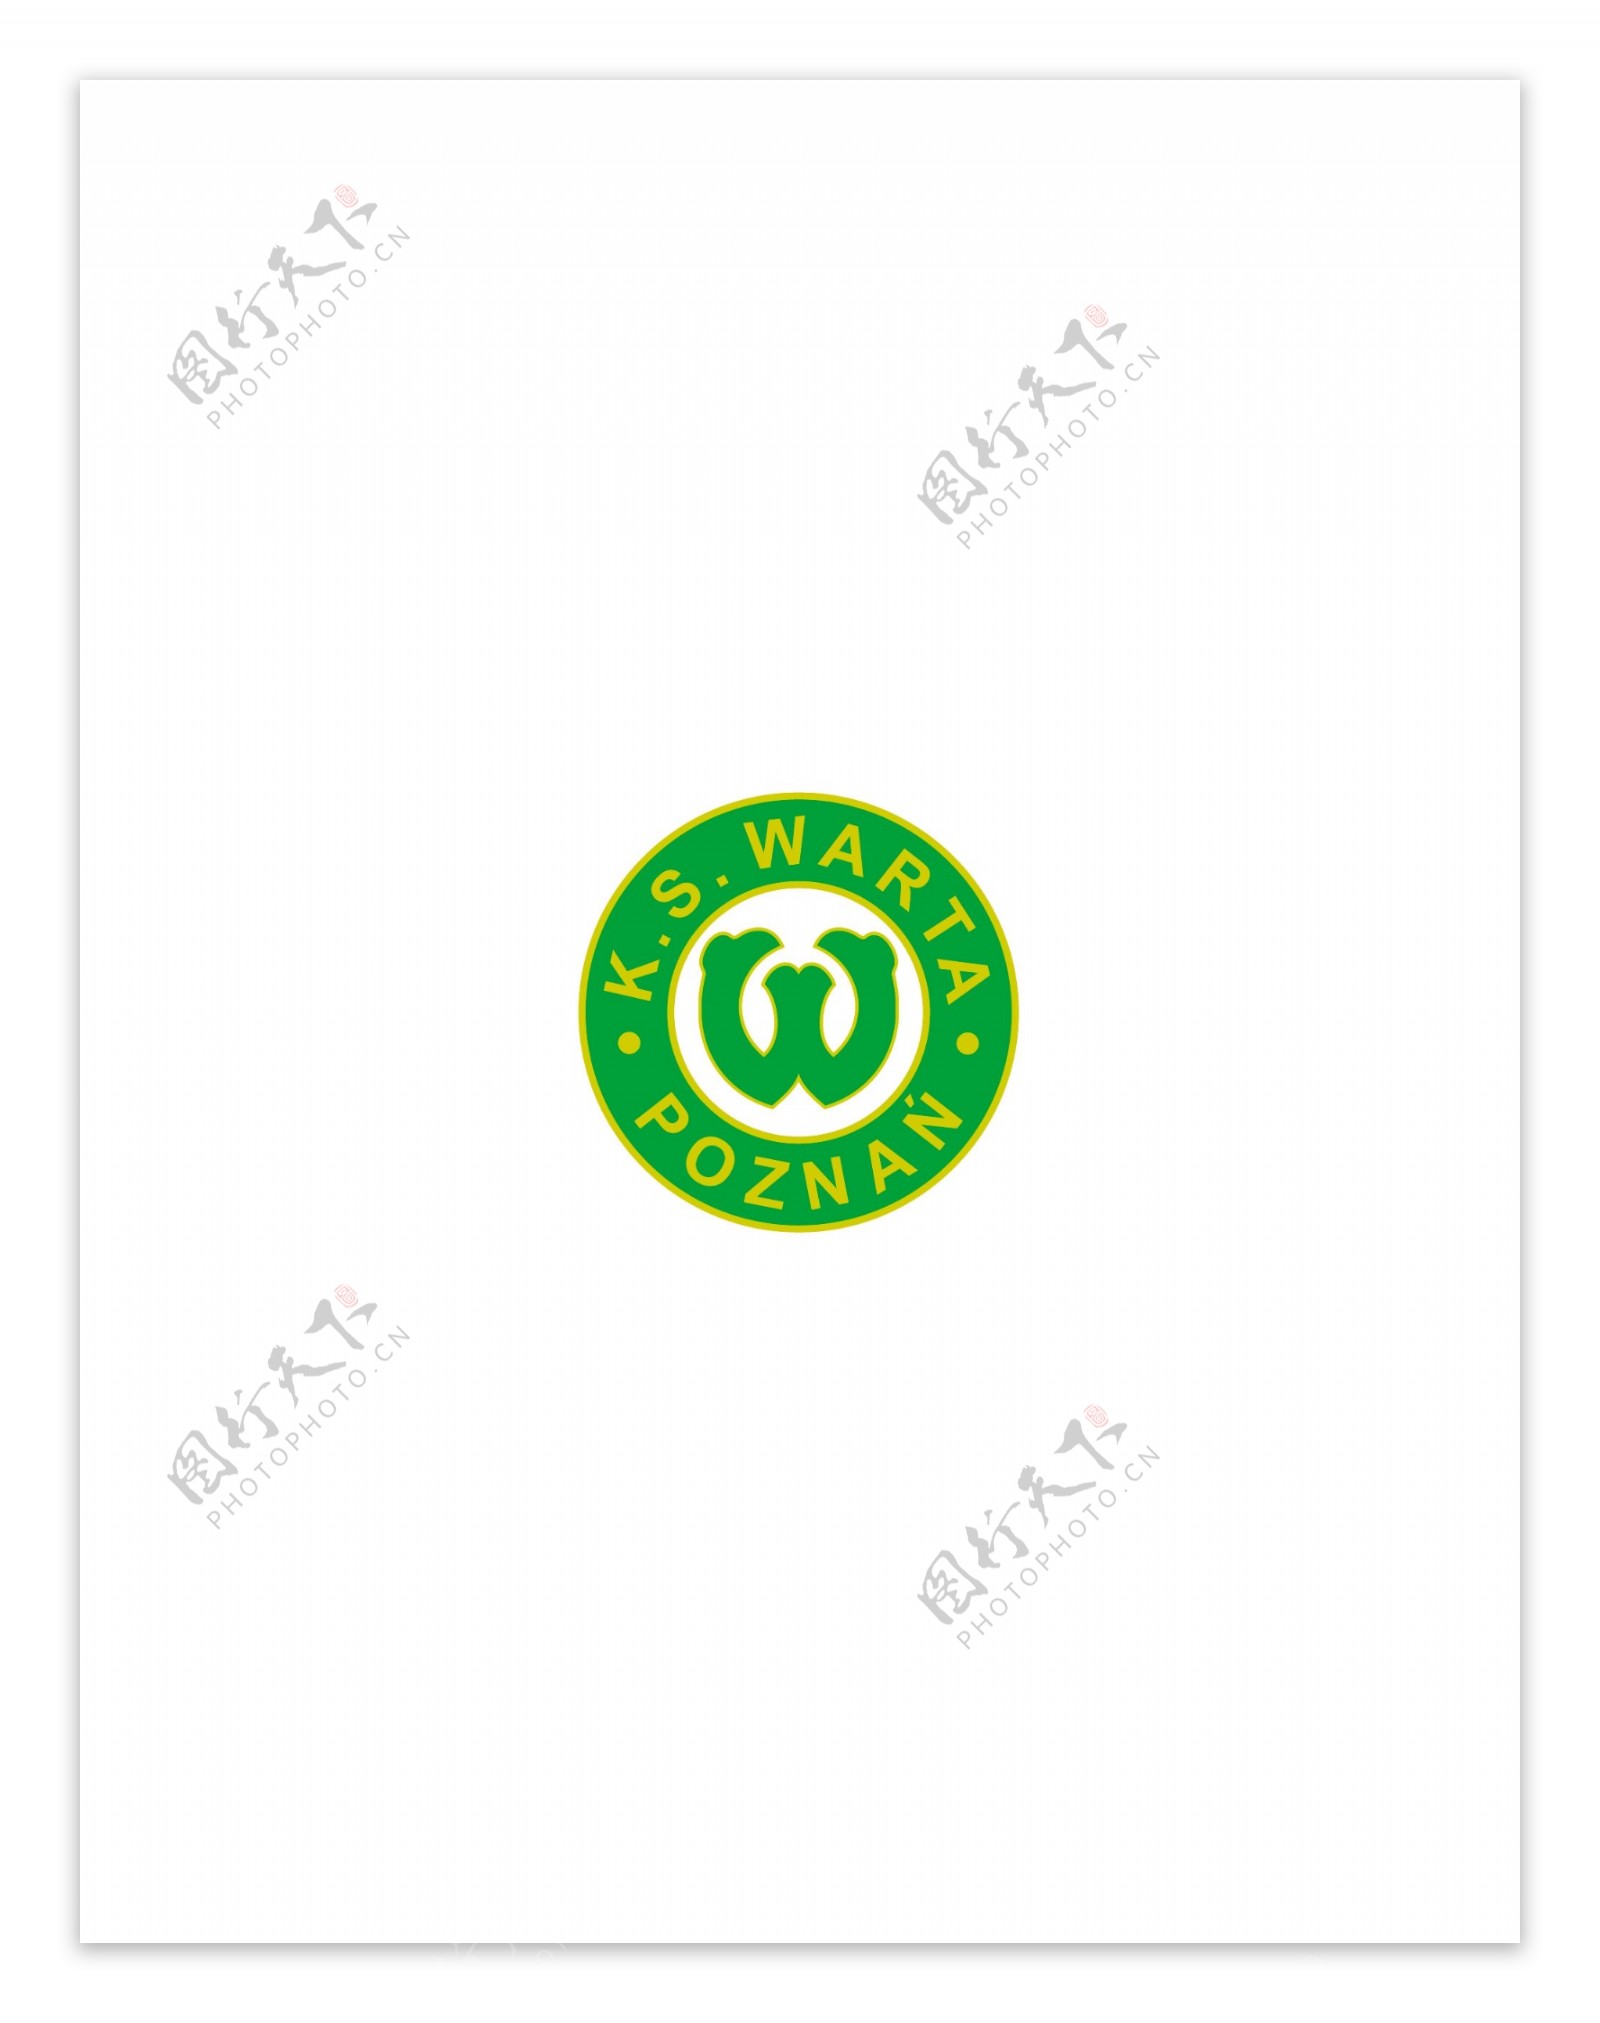 WartaPoznanlogo设计欣赏足球队队徽LOGO设计WartaPoznan下载标志设计欣赏